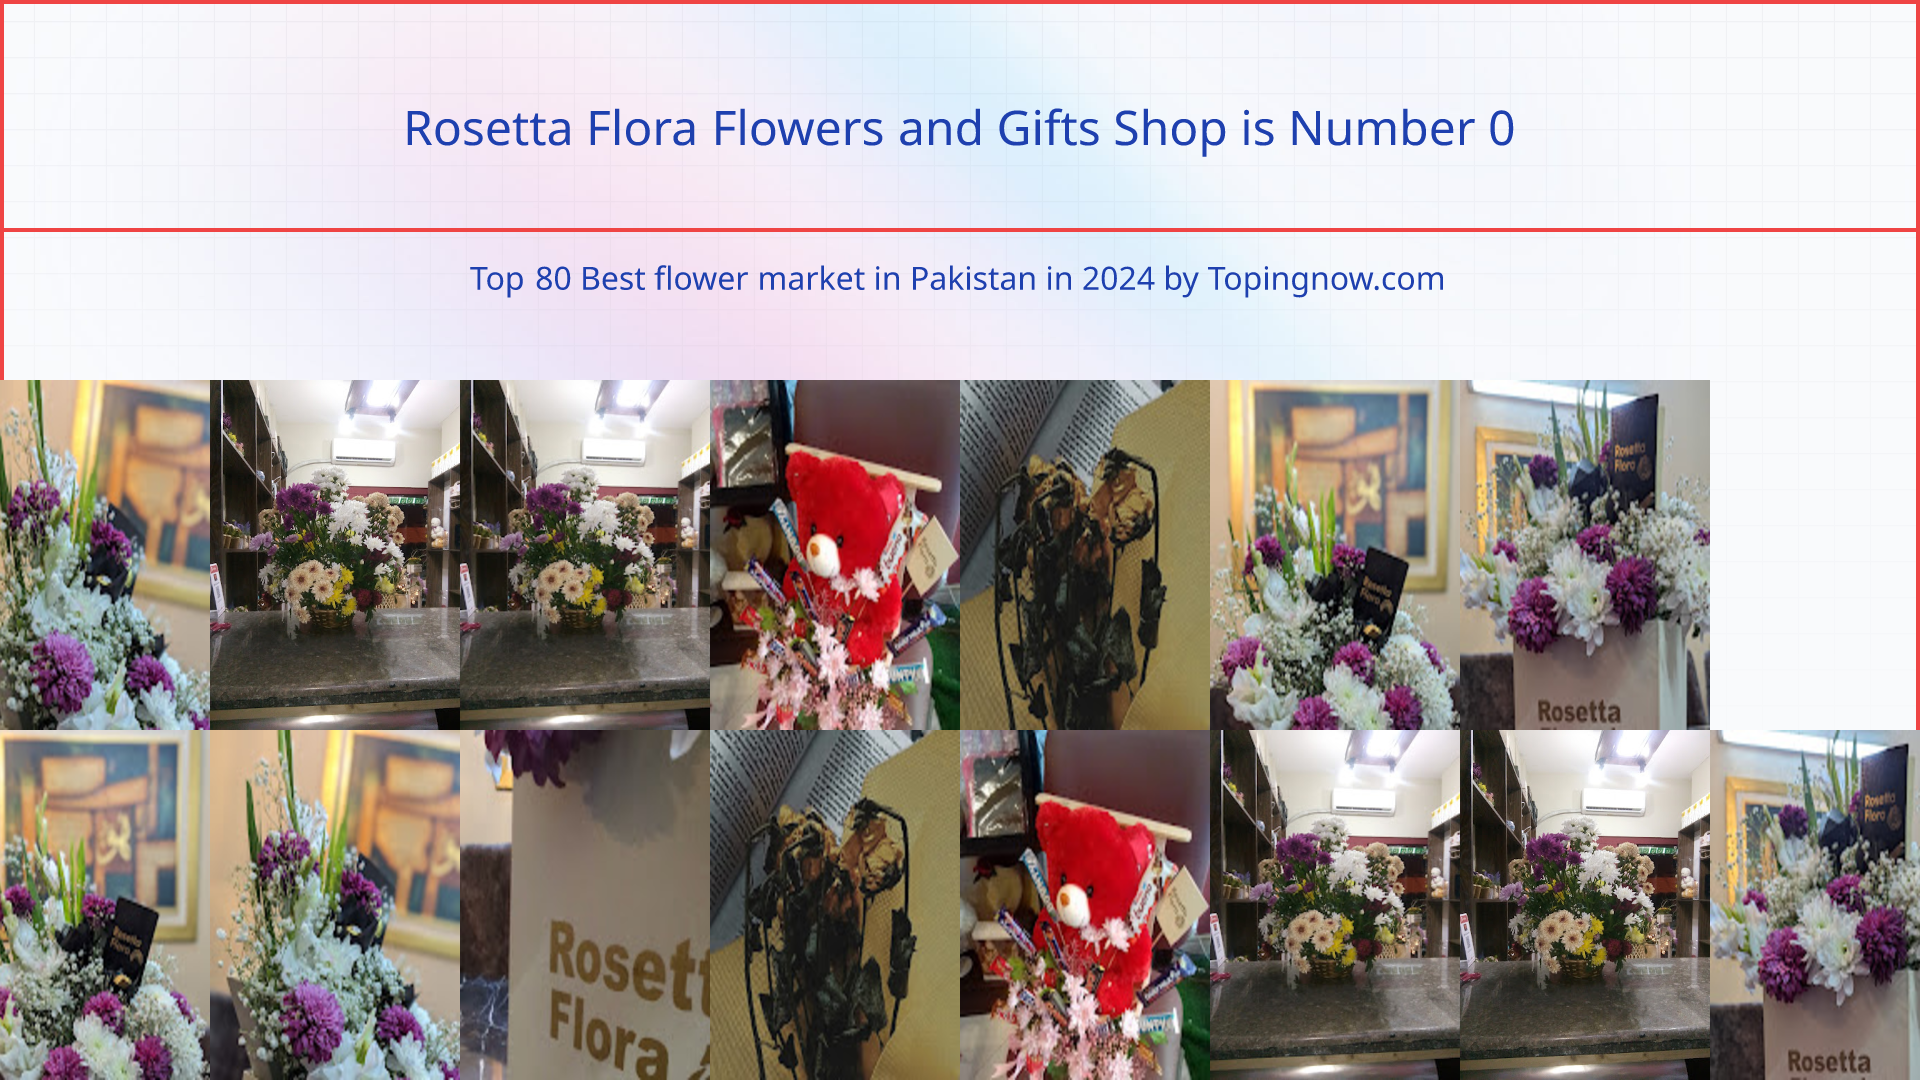 Rosetta Flora Flowers and Gifts Shop: Top 80 Best flower market in Pakistan in 2024